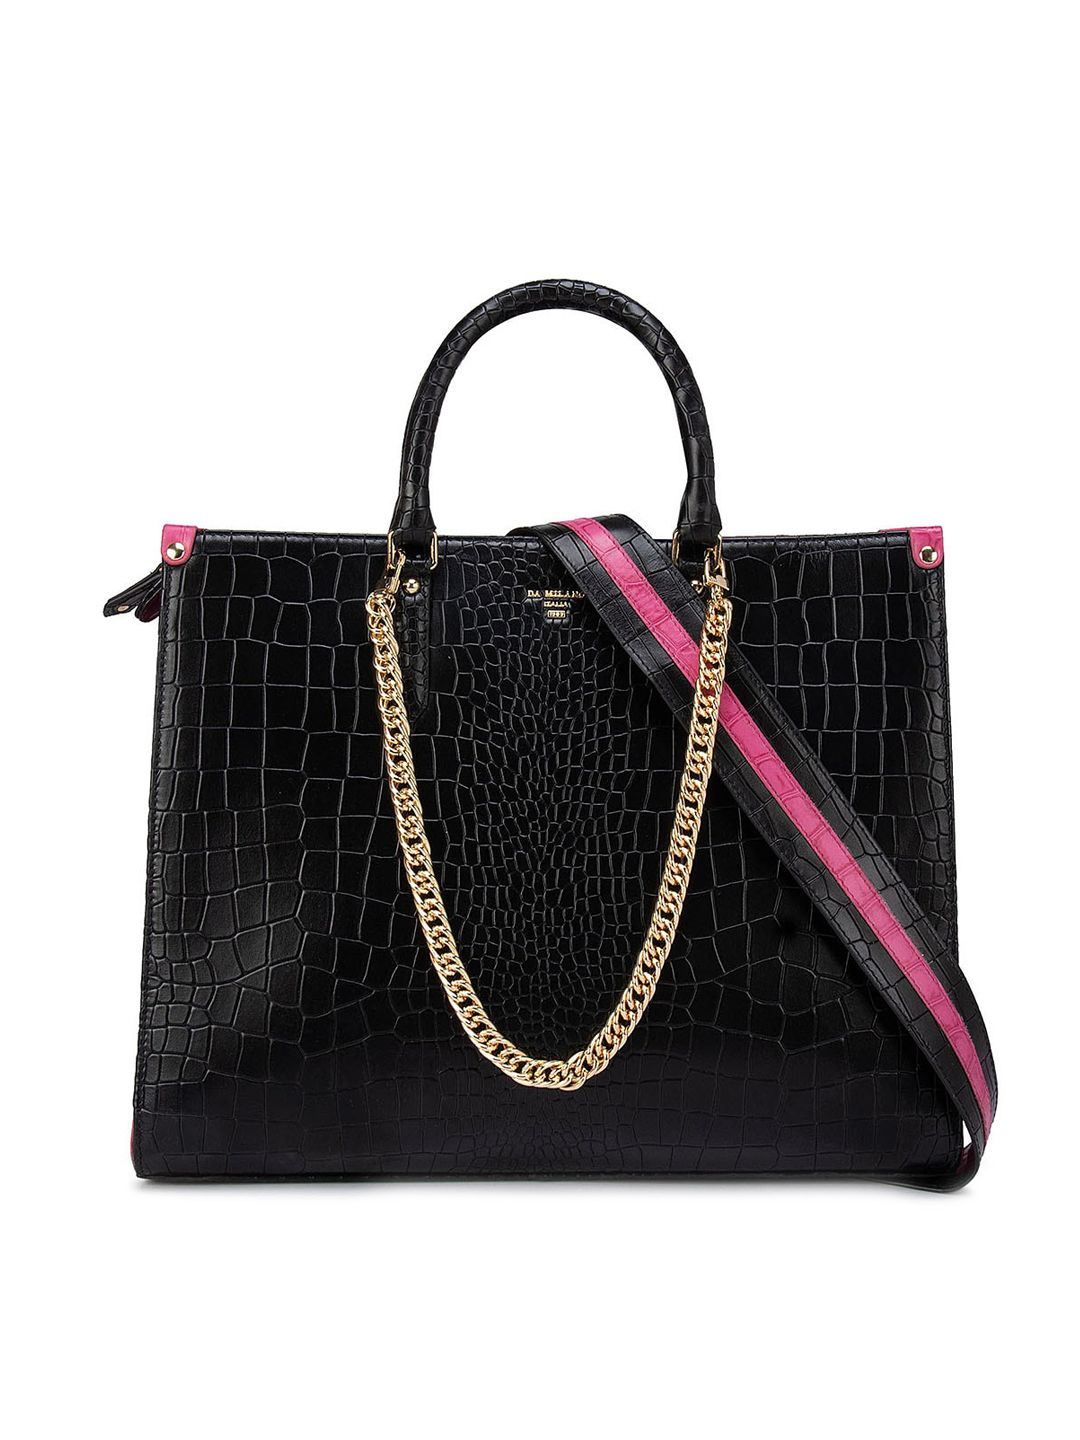 Da Milano Black Textured Leather Shopper Handheld Bag Price in India